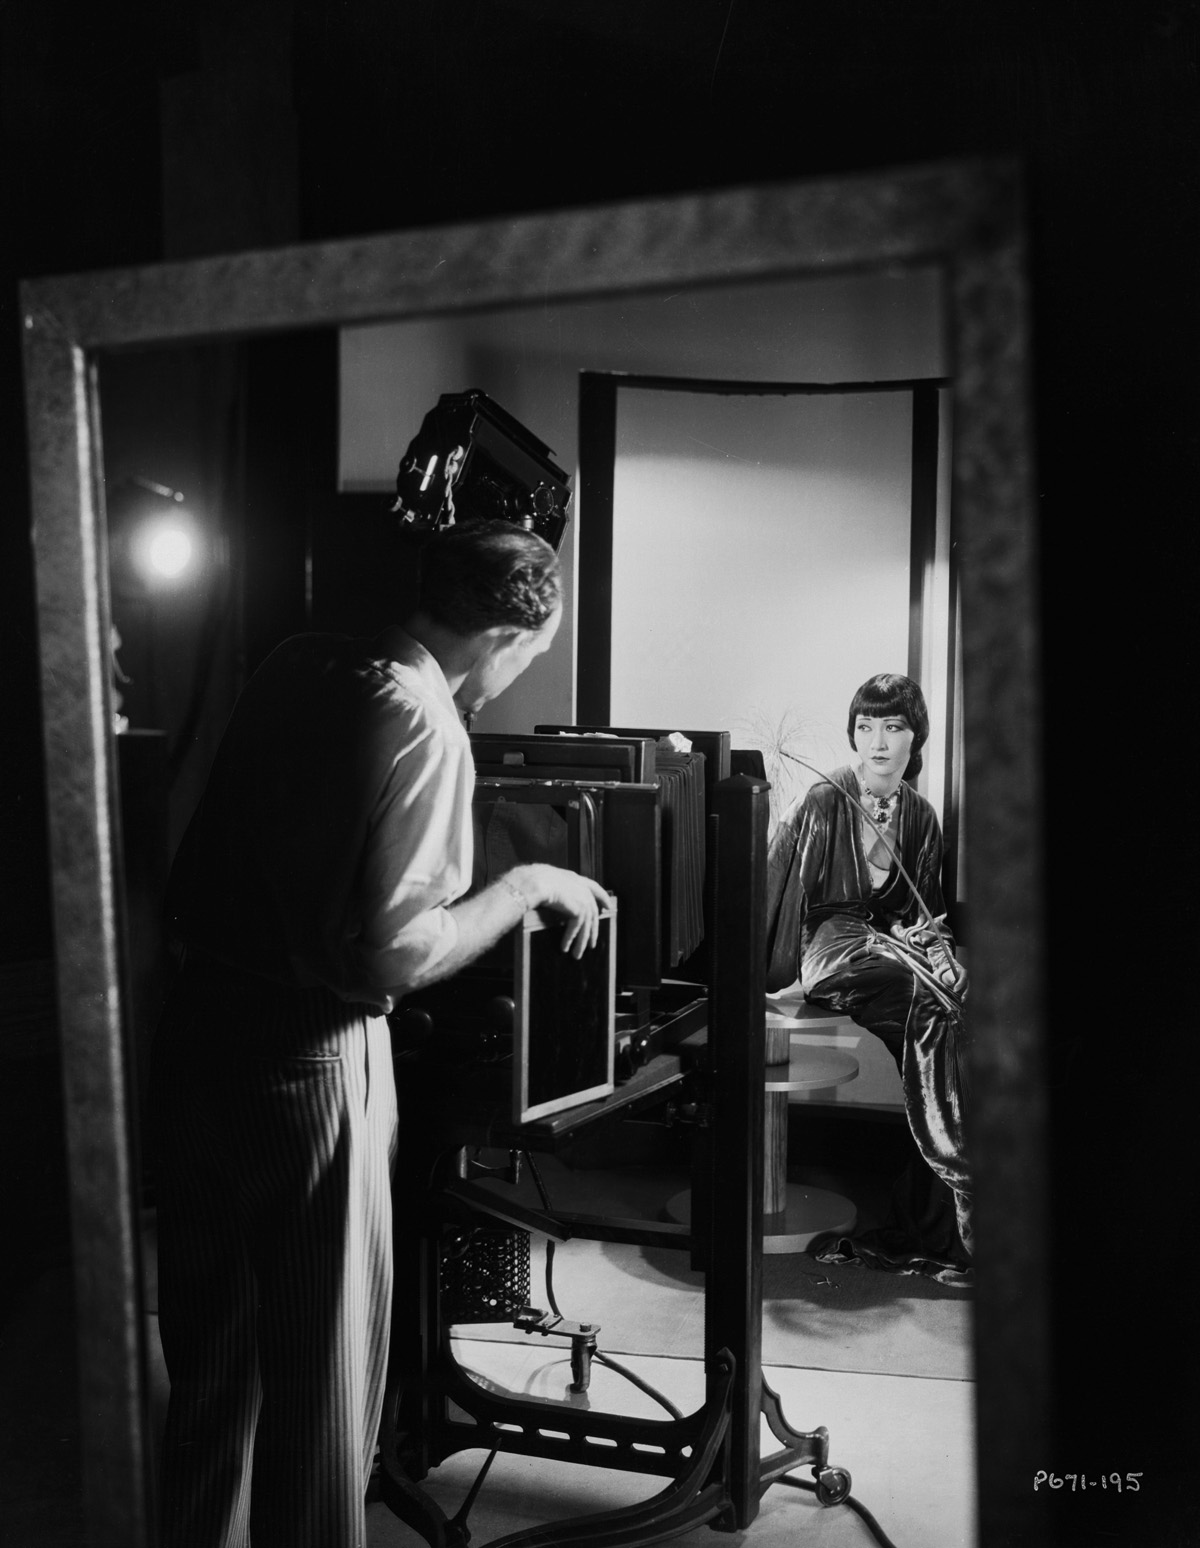 A reflection in a mirror shows Paramount photographer Otto Dyar taking a studio portrait of Anna May Wong, circa 1932. Otto Dyar/John Kobal Foundation via VCG